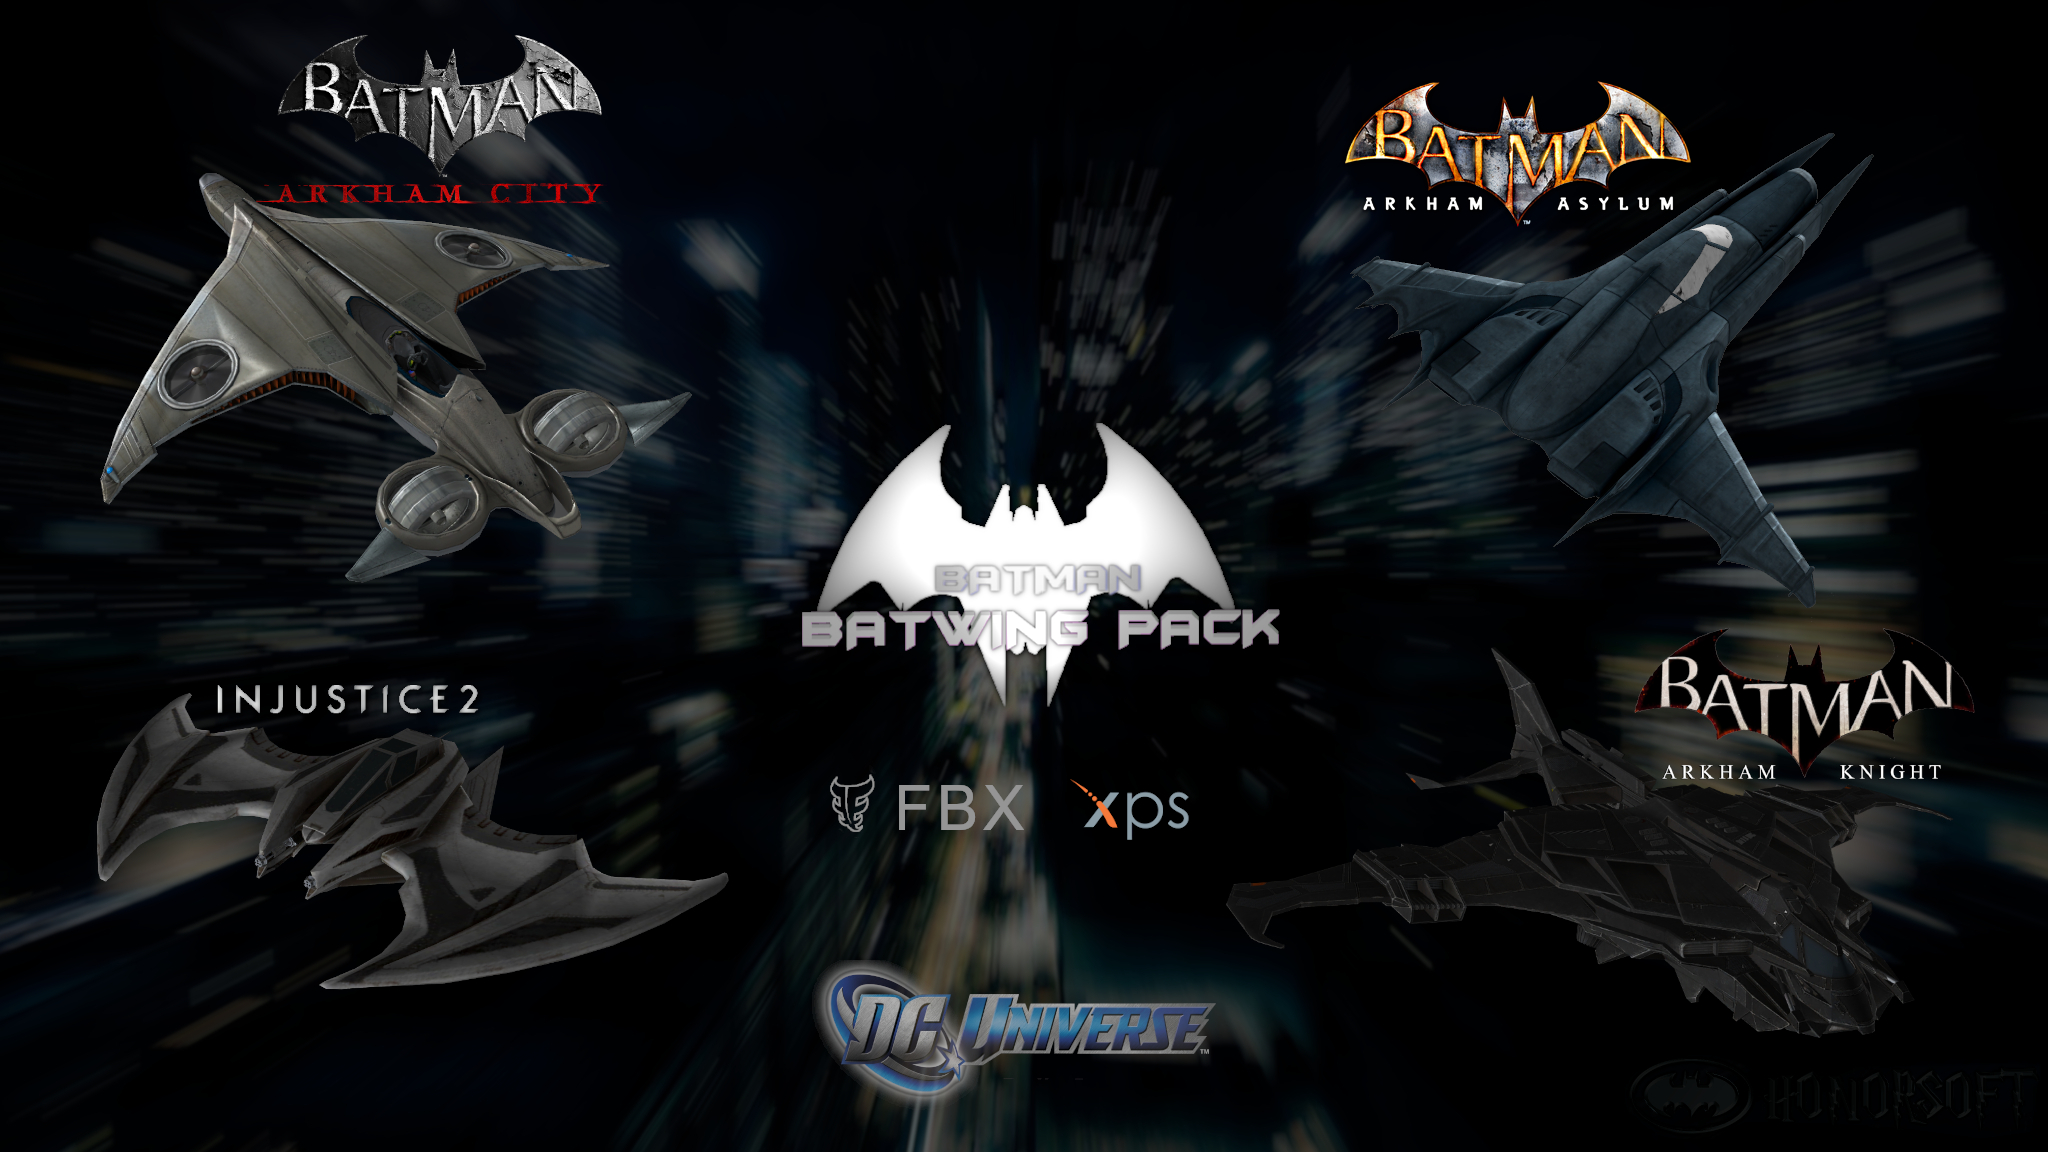 Batwing Rigged Pack 1 - FBX, XPS, OBJ DOWNLOAD by Honorsoft on DeviantArt